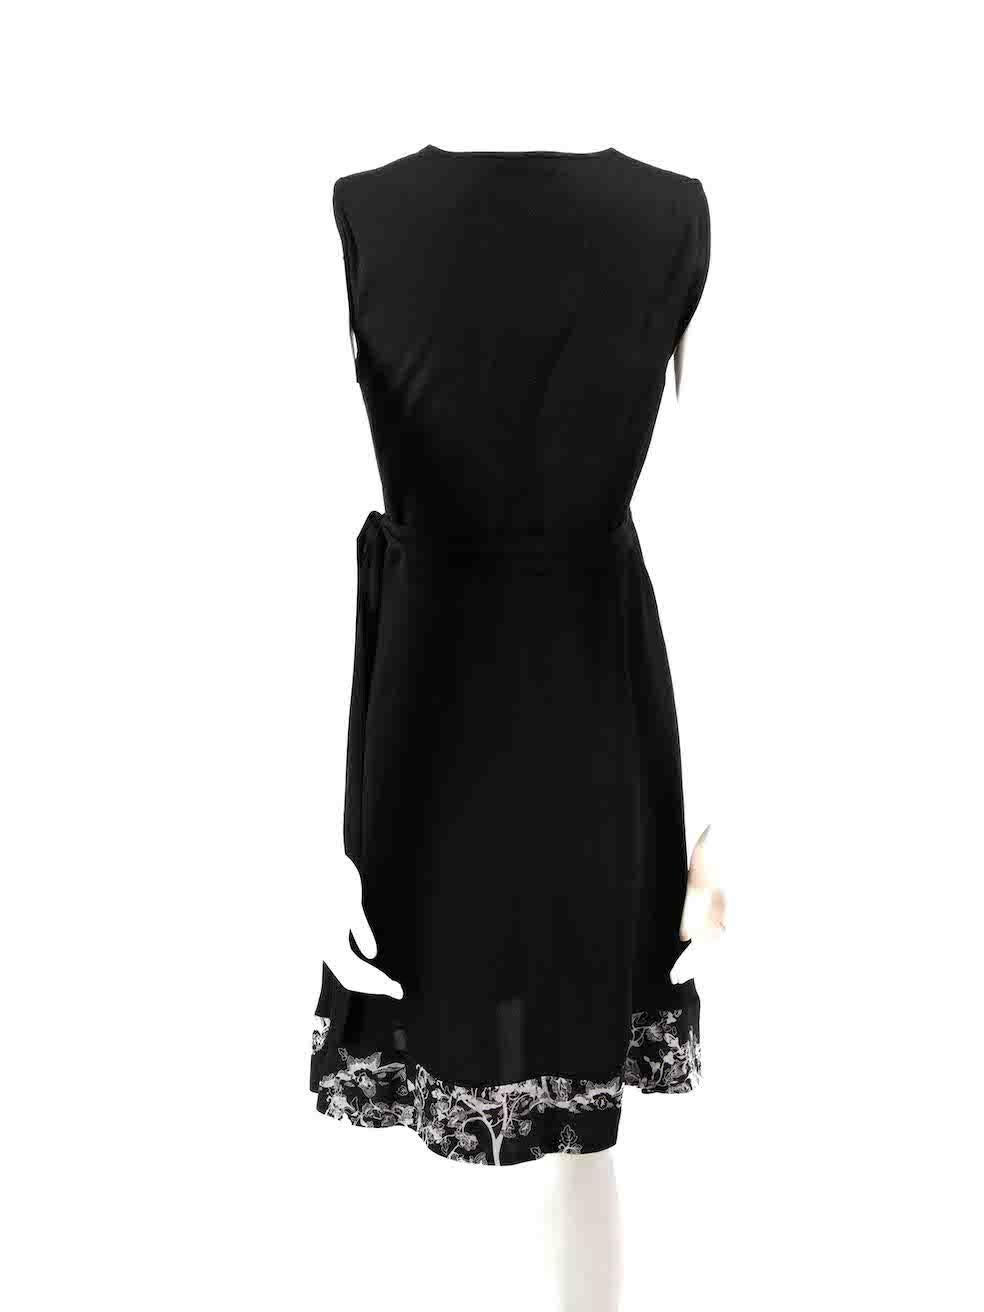 Diane Von Furstenberg Black Floral Pattern Panelled Dress Size M In Excellent Condition For Sale In London, GB